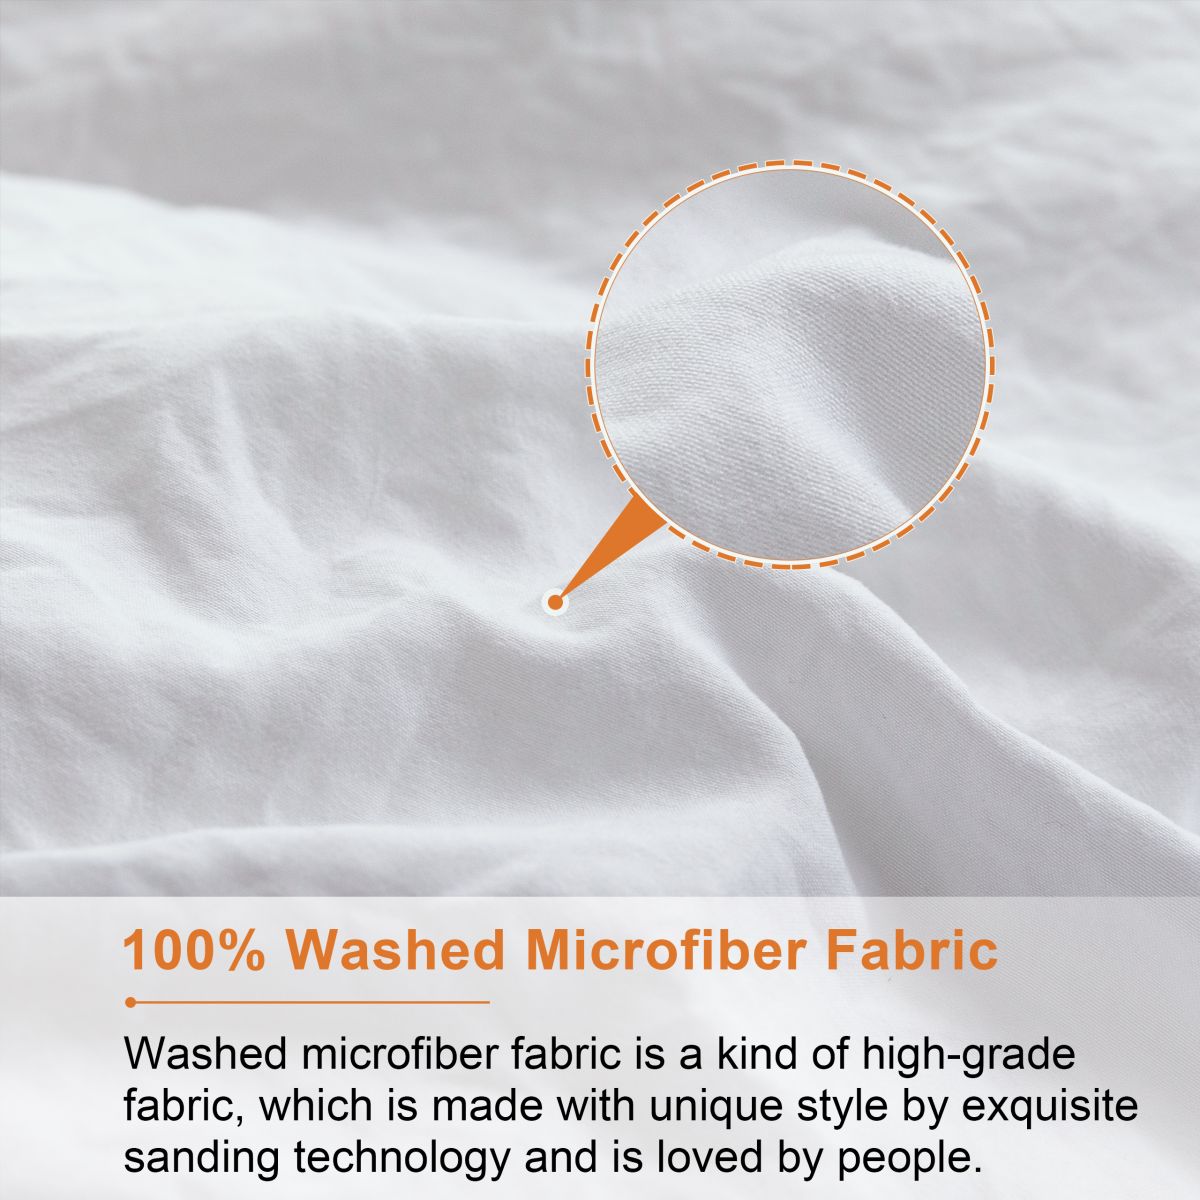 100% Washed Microfiber Fabric